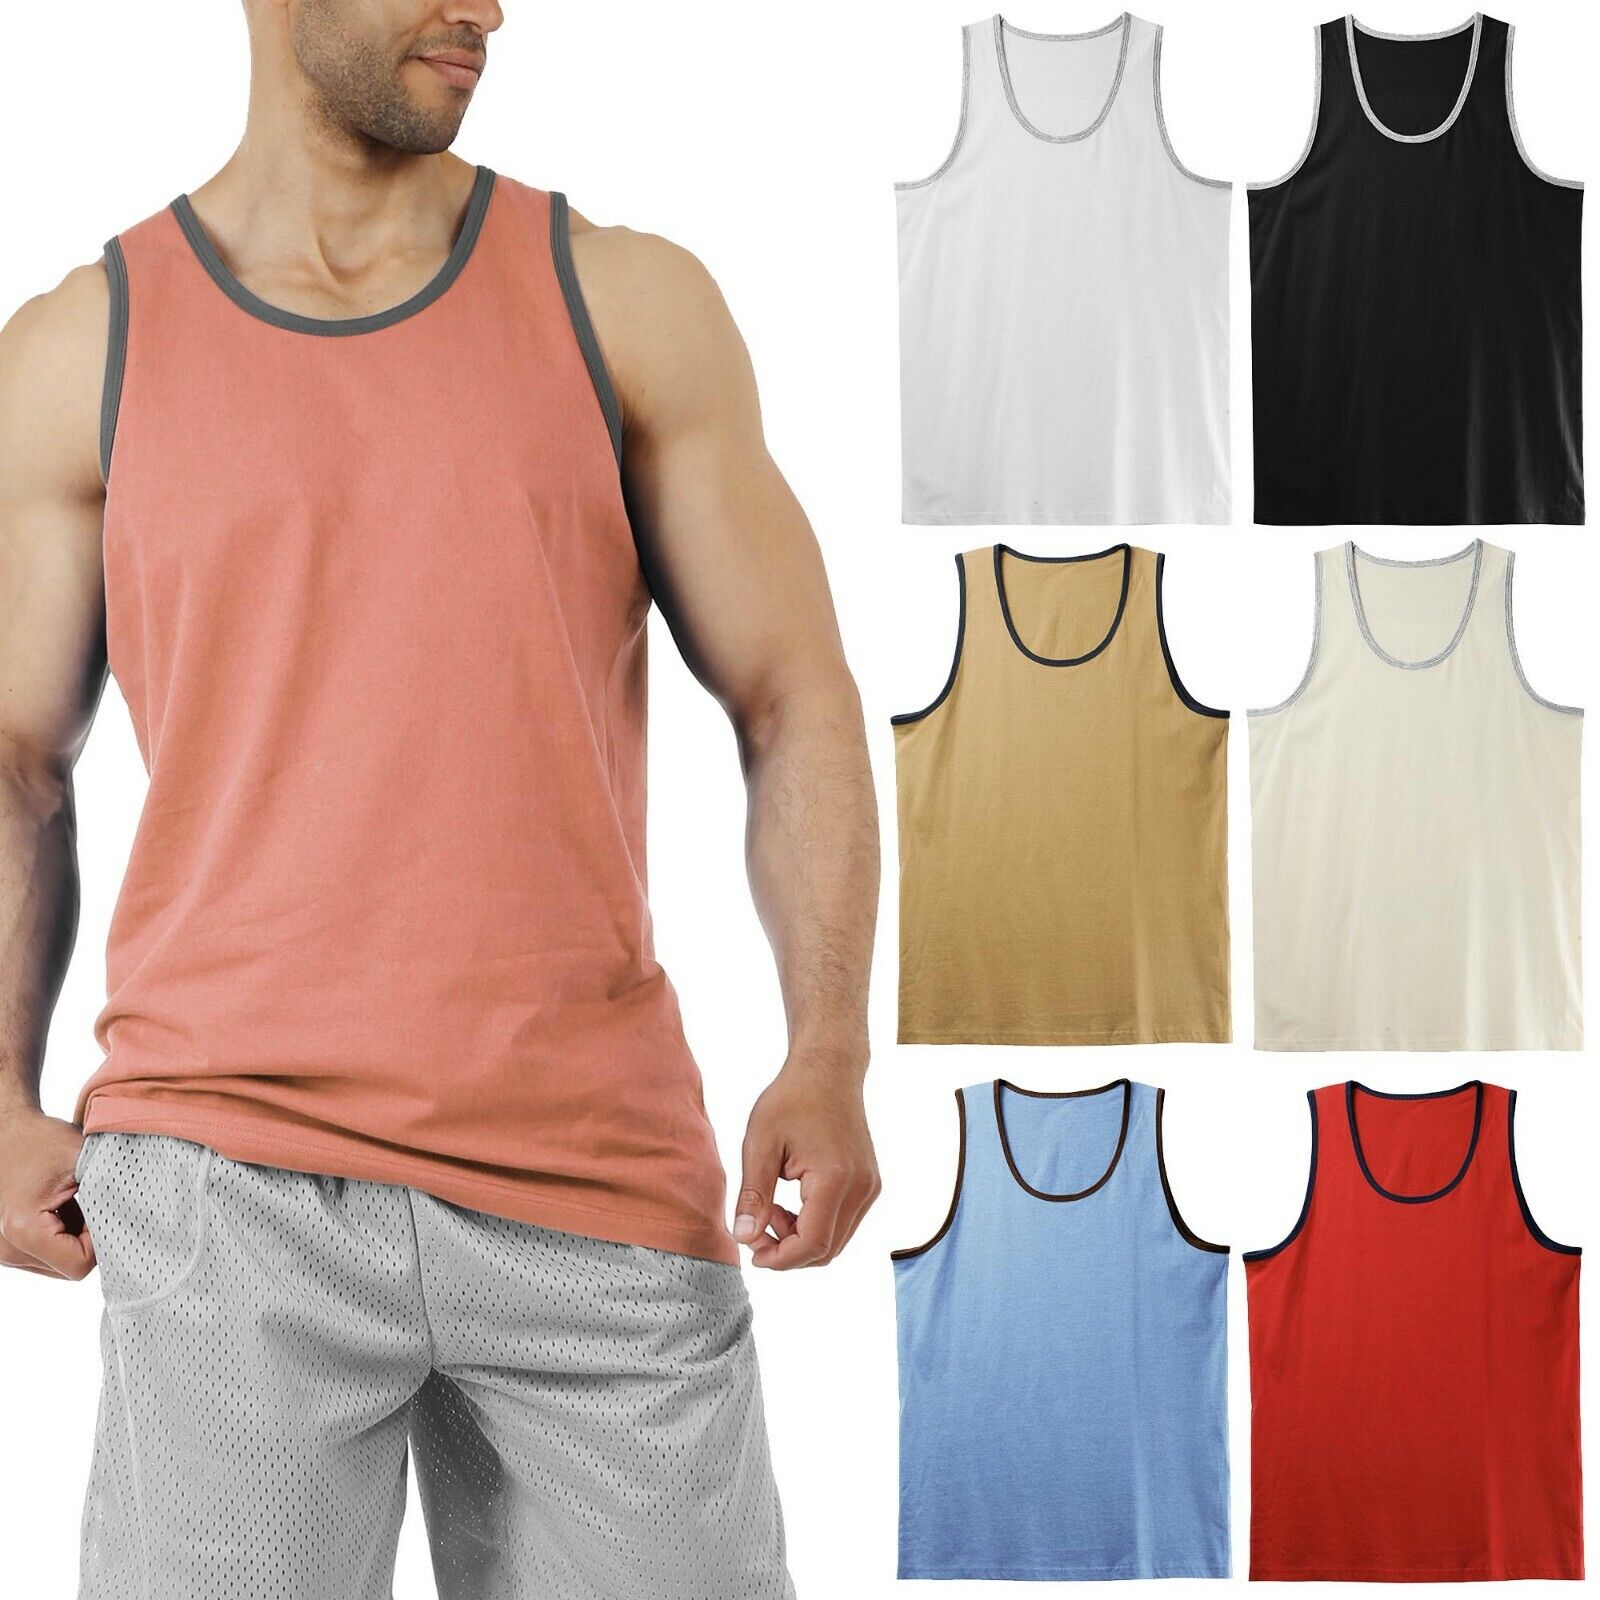 Men's Tank Top Muscle Gym Sleeveless Plain T-Shirts Tee A-Shirt 100%Cotton NEW